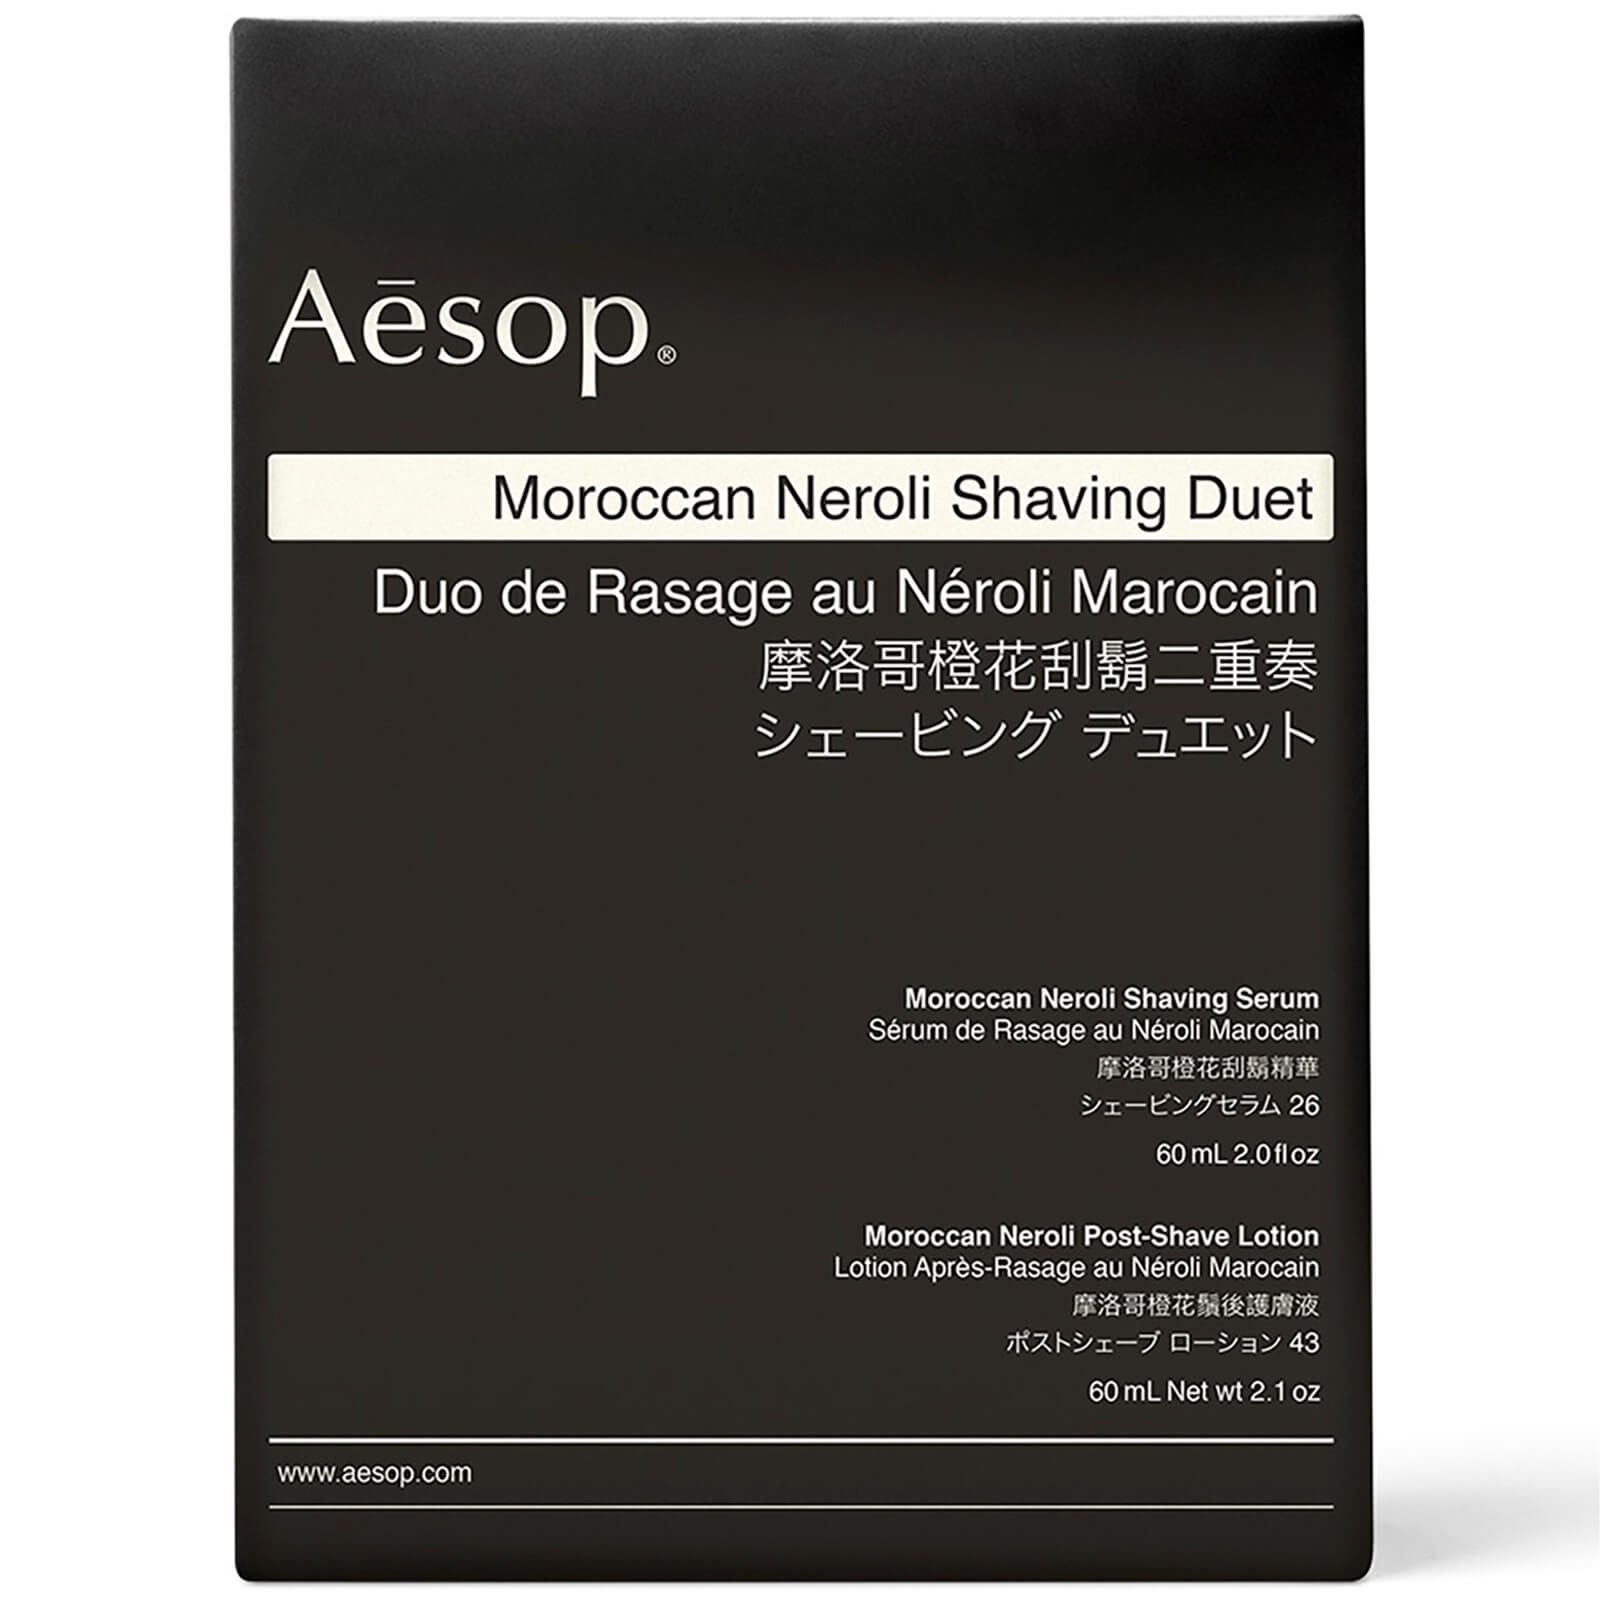 Aesop Moroccan Neroli Shaving Duet lookfantastic.com imagine